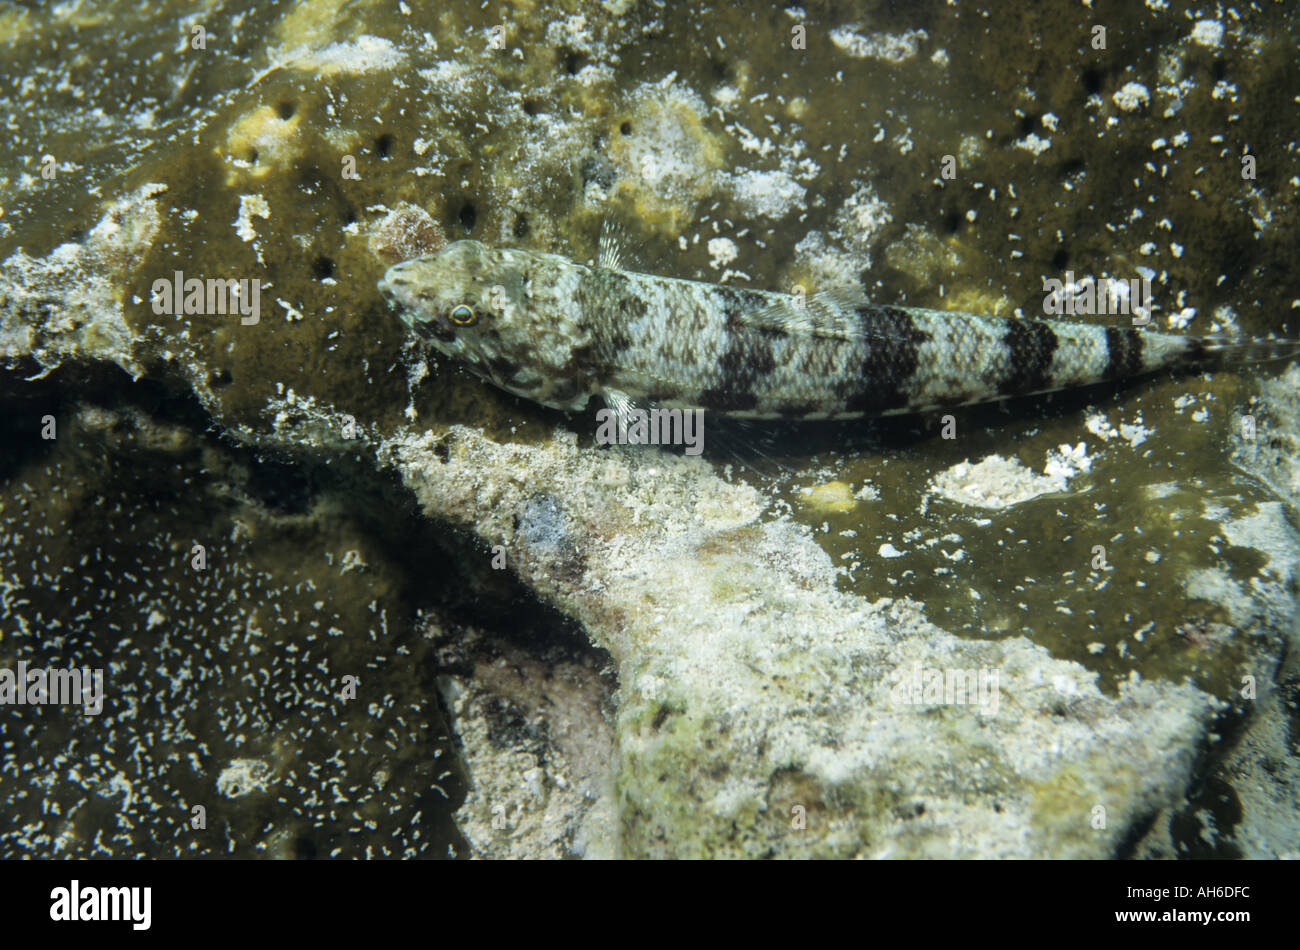 New caledonia noumea lagoon le tabu reef common lizardfish synodus variegatus Stock Photo